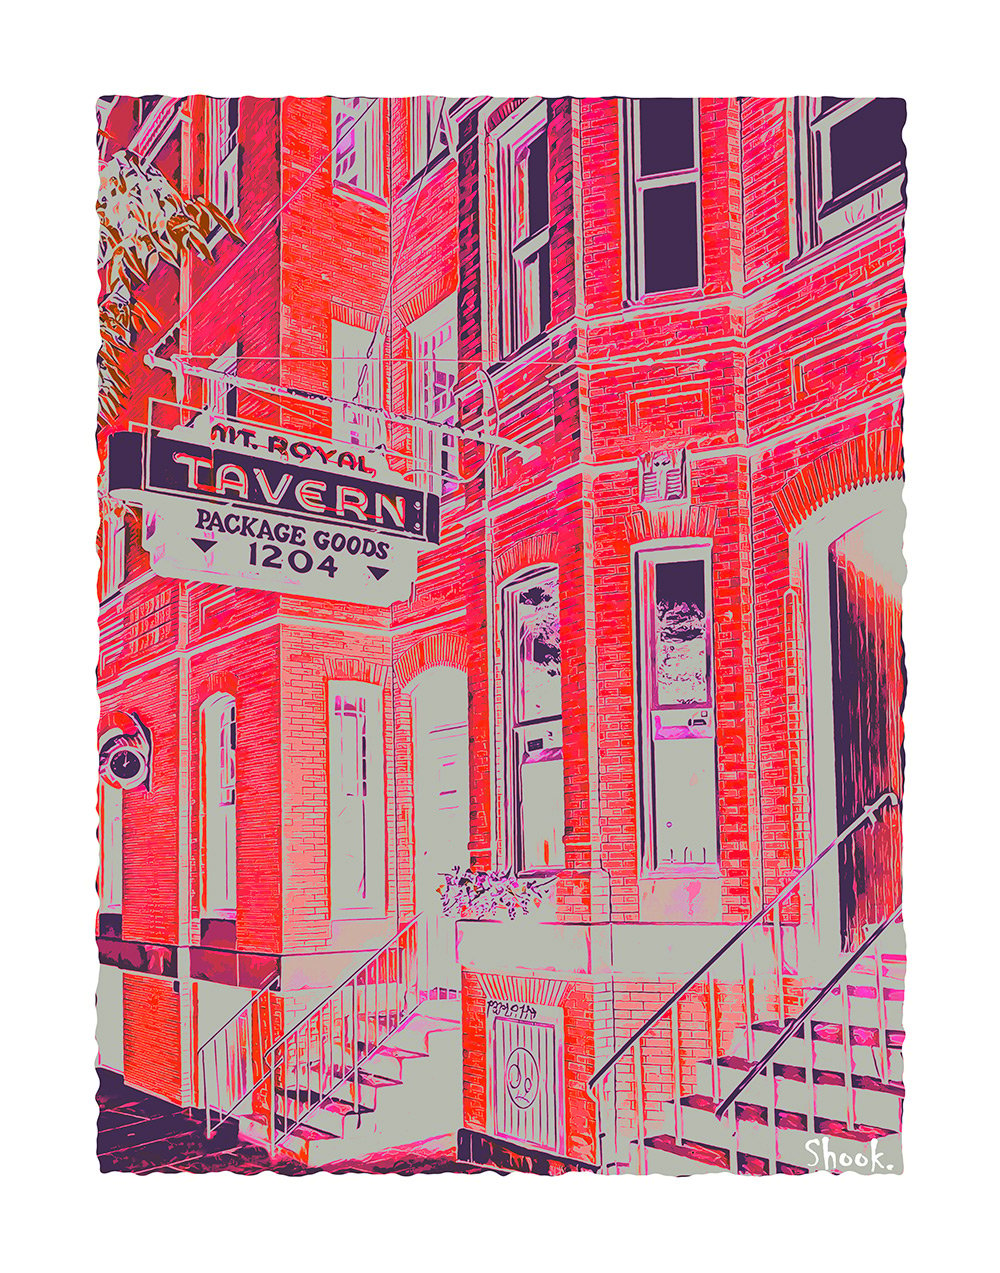 Mt. Royal Tavern - Baltimore MD Art Print (Multi-size options)